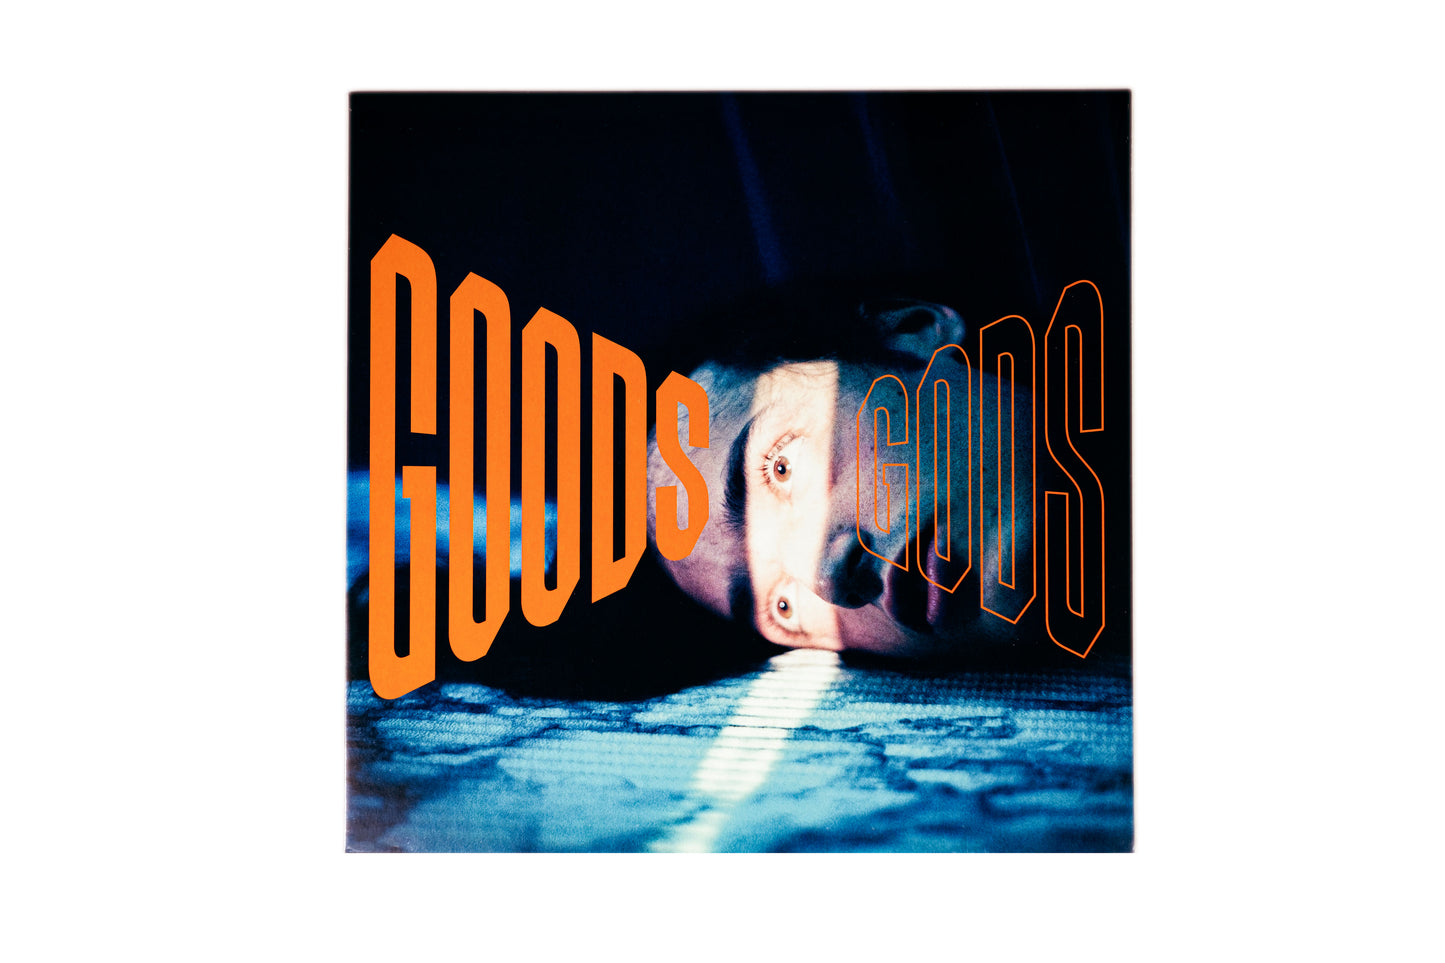 Hearts Hearts LP "Goods / Gods"